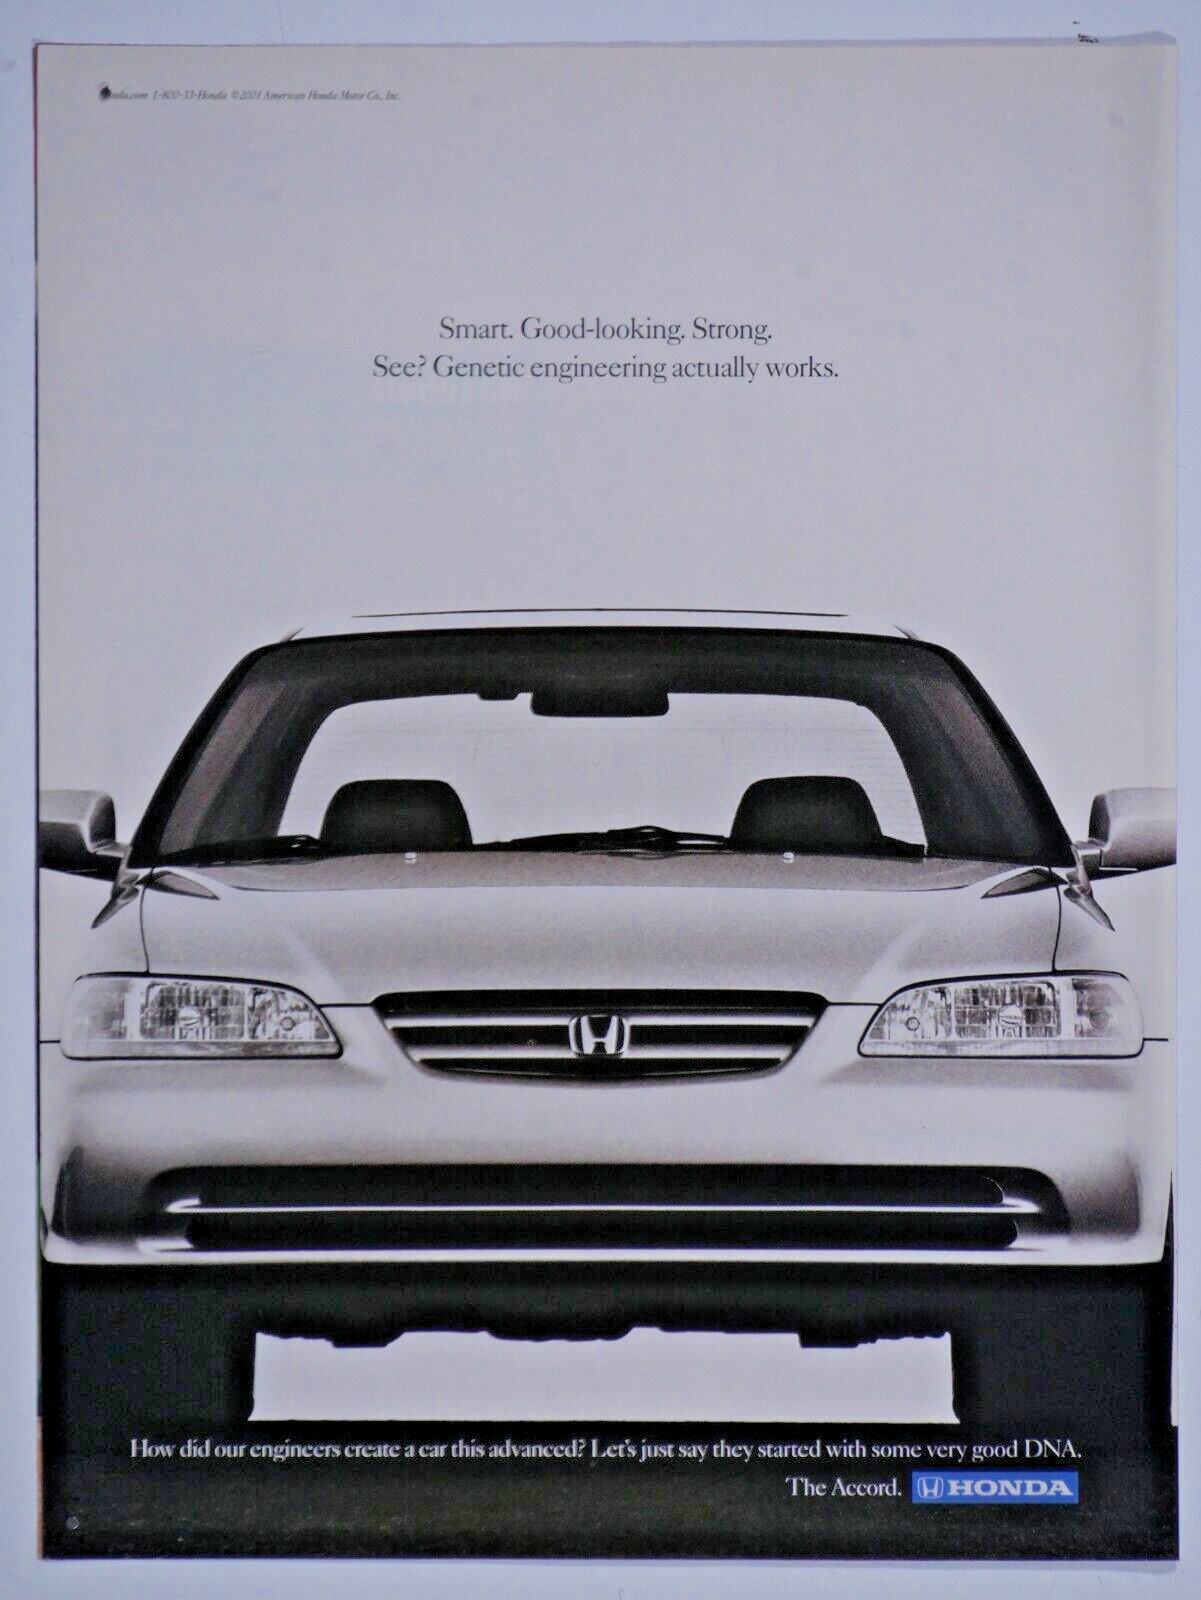 2002 Honda Accord Vintage Smart Good Looking Strong Original Print Ad 8.5 x 11